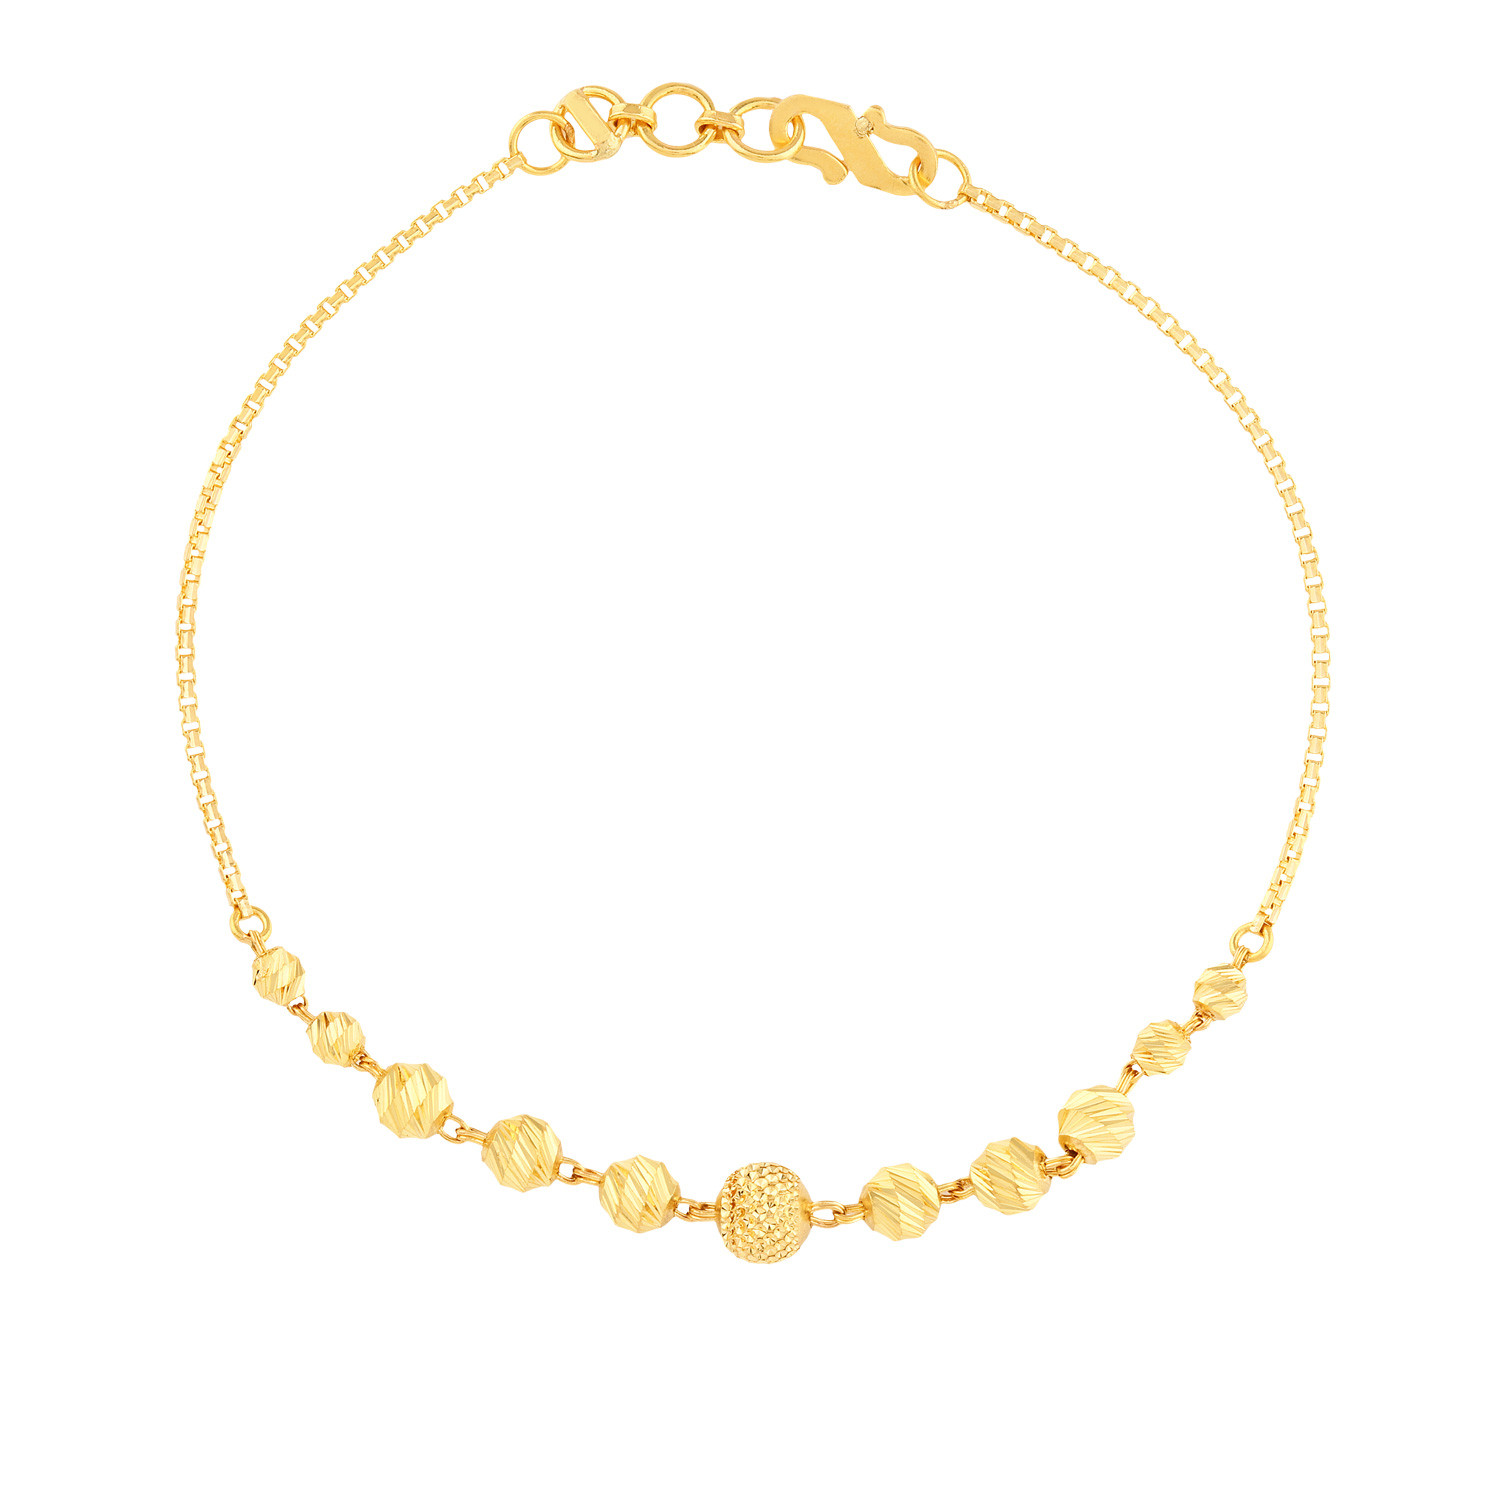 Singapore Twist Chain Delicate Gold Chain Bracelet 18k Gold - Etsy Canada